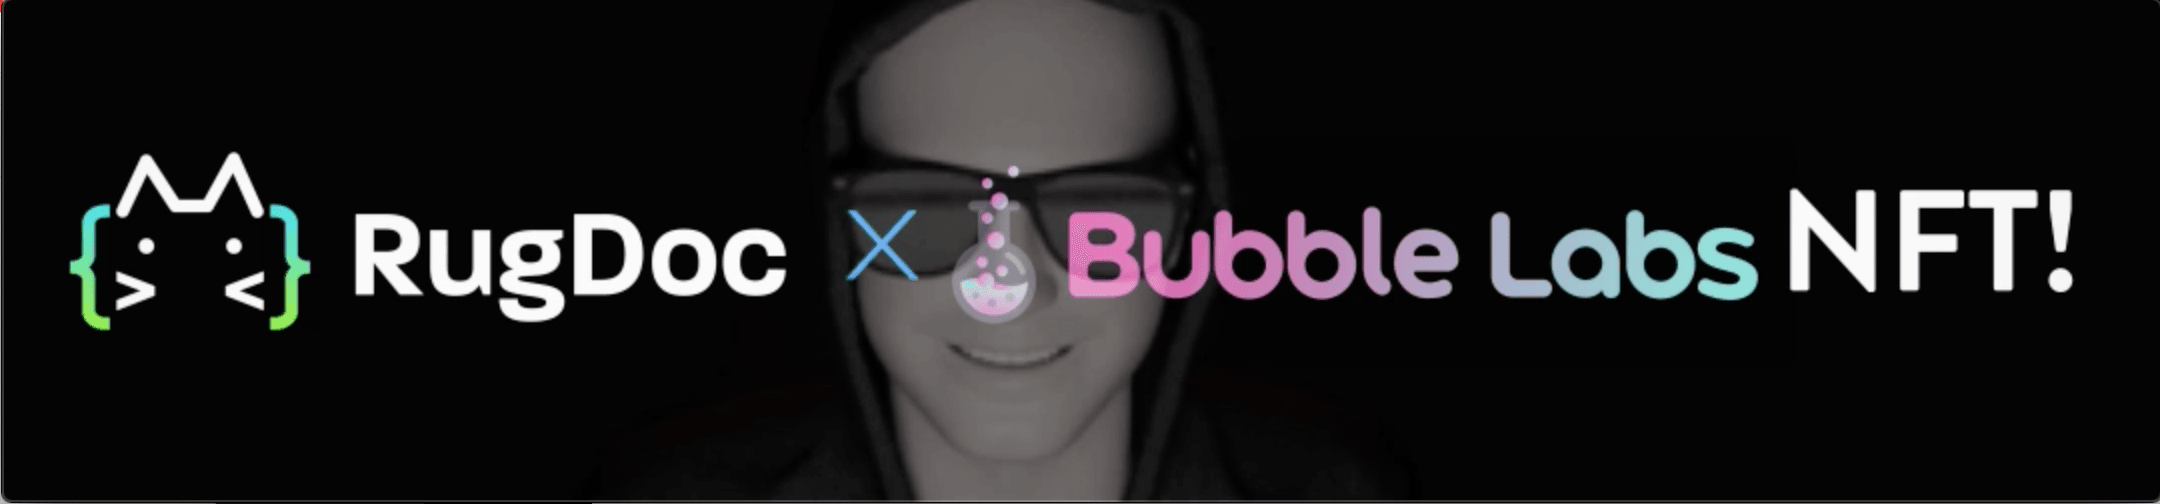 RugDoc-BubbleLabs banner